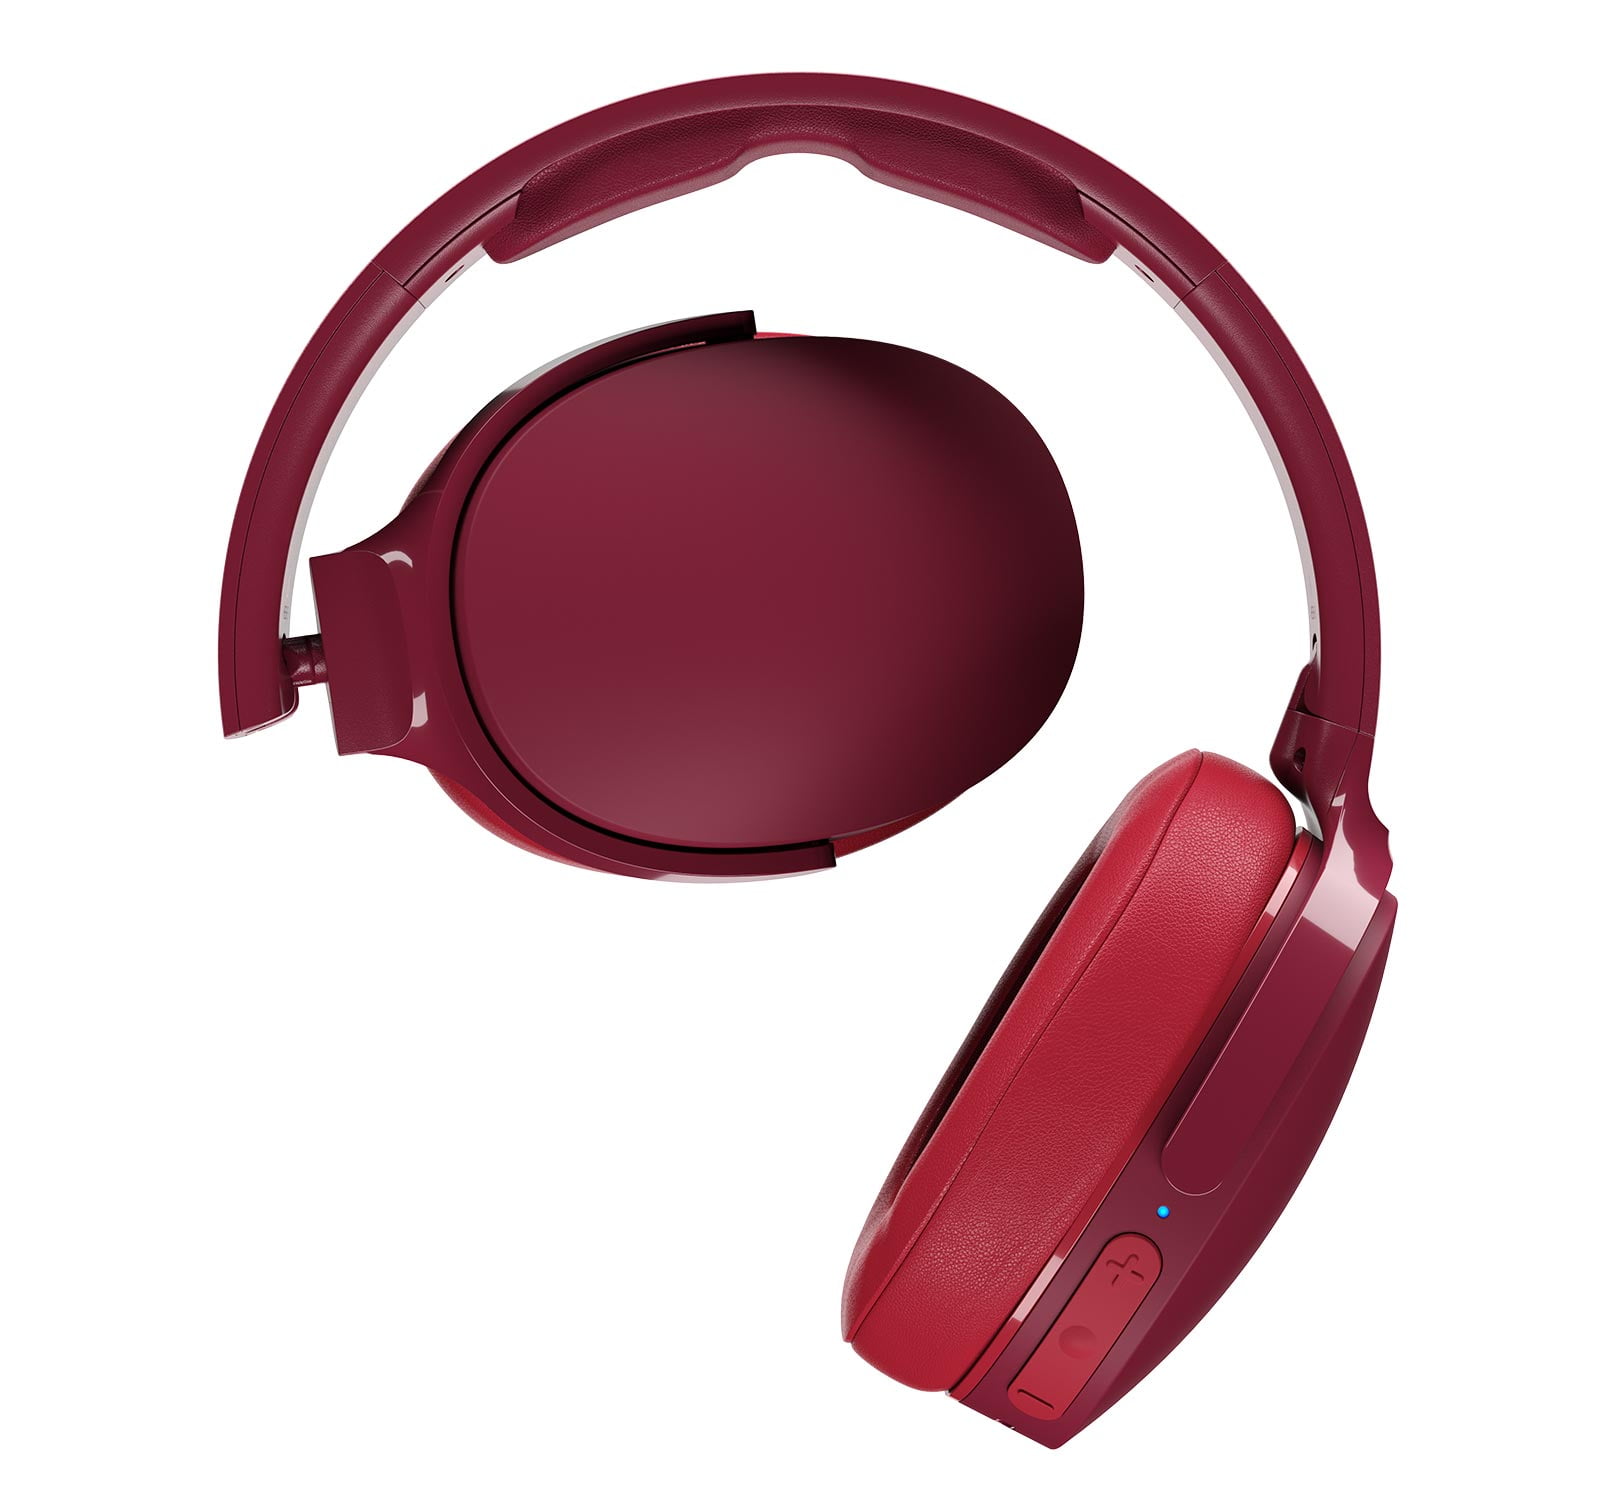 Skullcandy Hesh 3 Over-Ear Bluetooth Wireless Headphone in Red